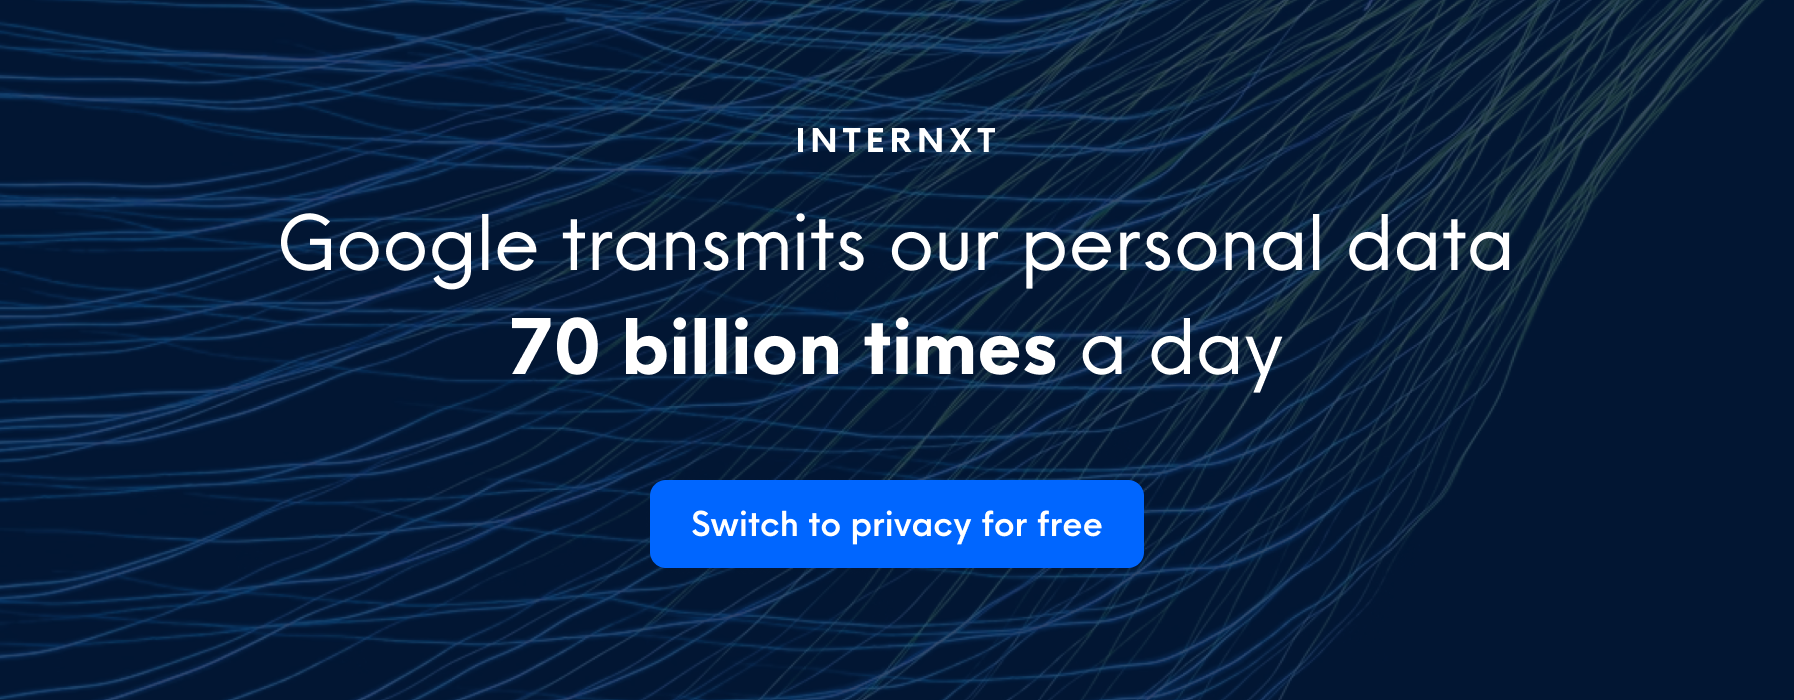 Internxt CTA: Google personal data statistic.